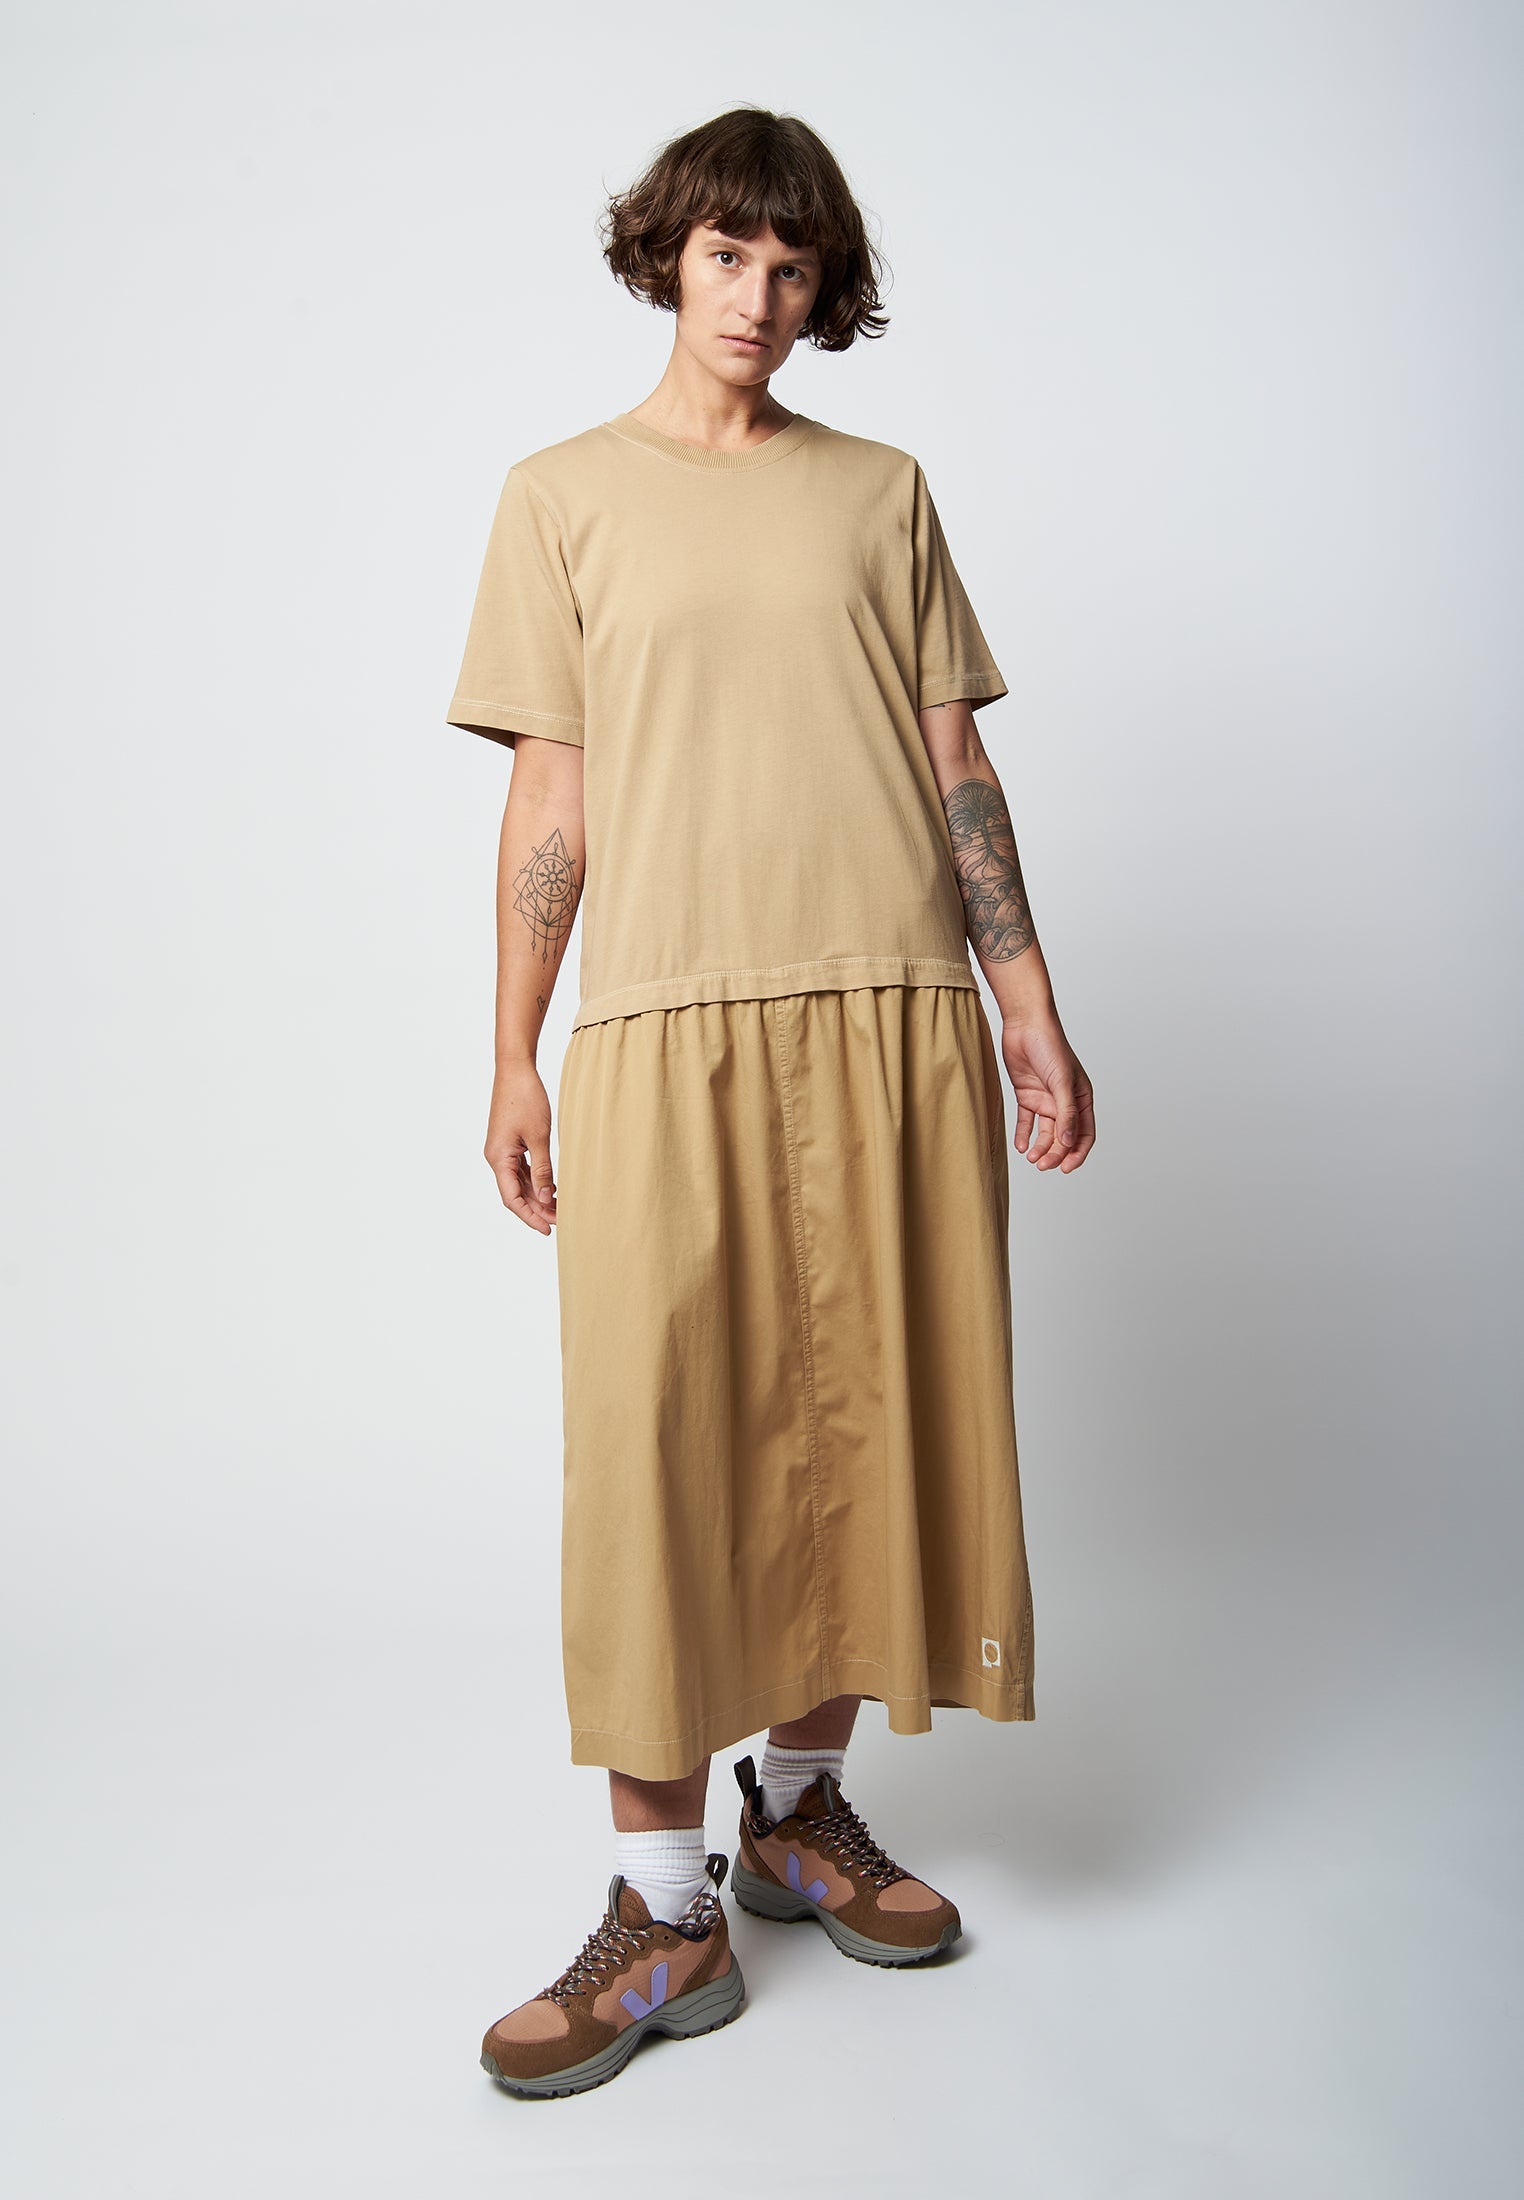 SPORTY TARA brown t-shirt dress